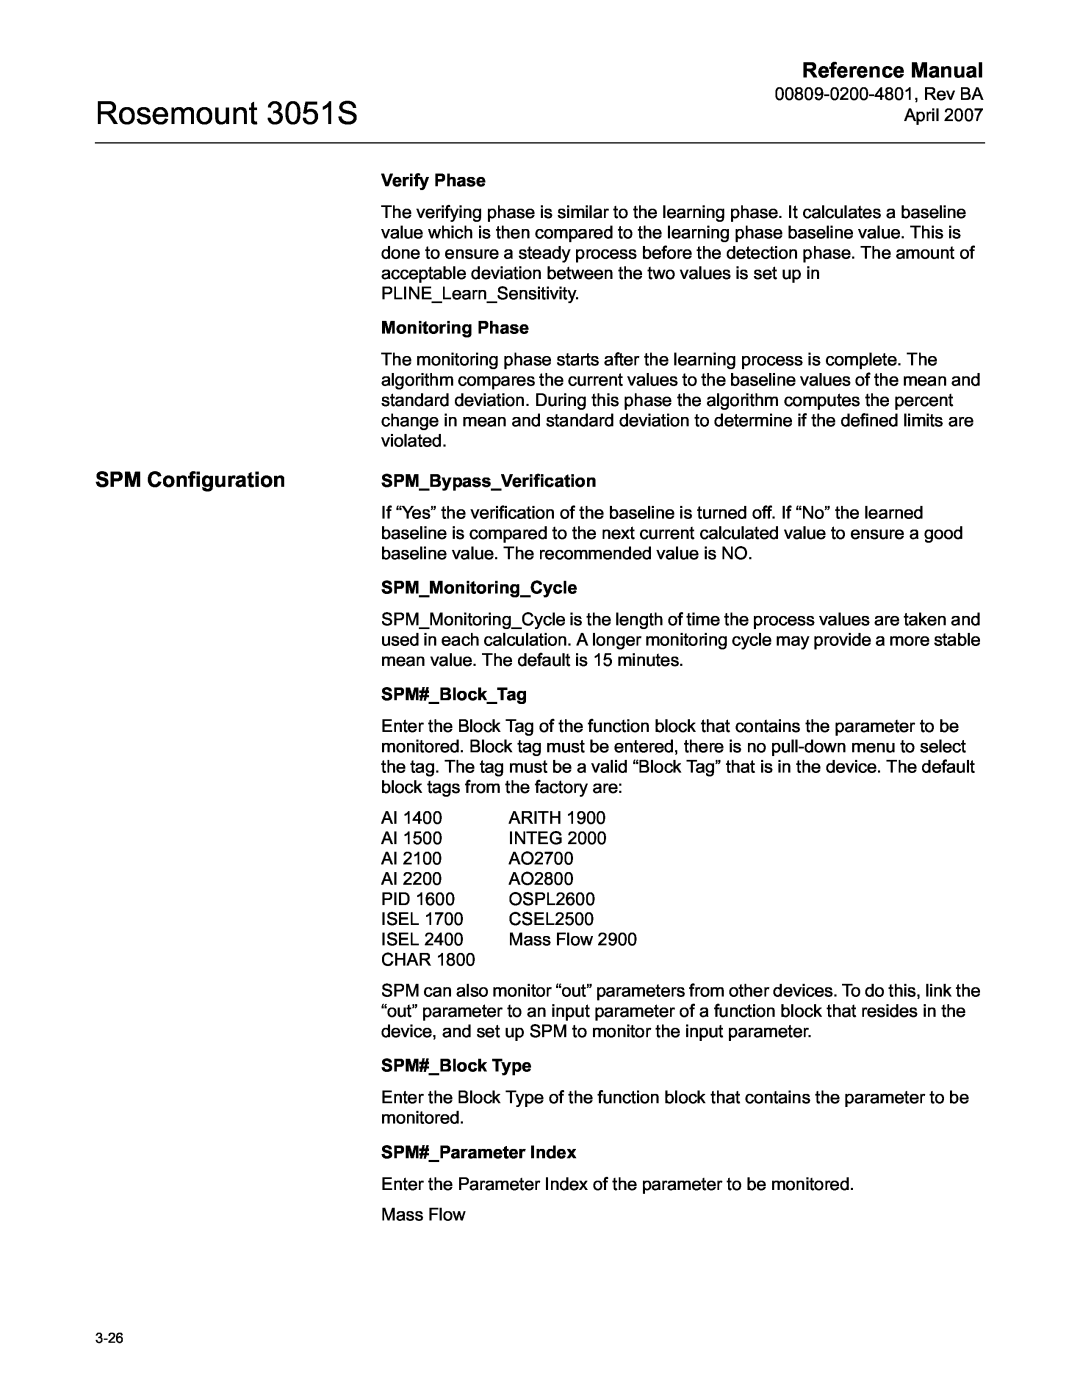 Emerson manual SPM Configuration, Rosemount 3051S, Reference Manual 